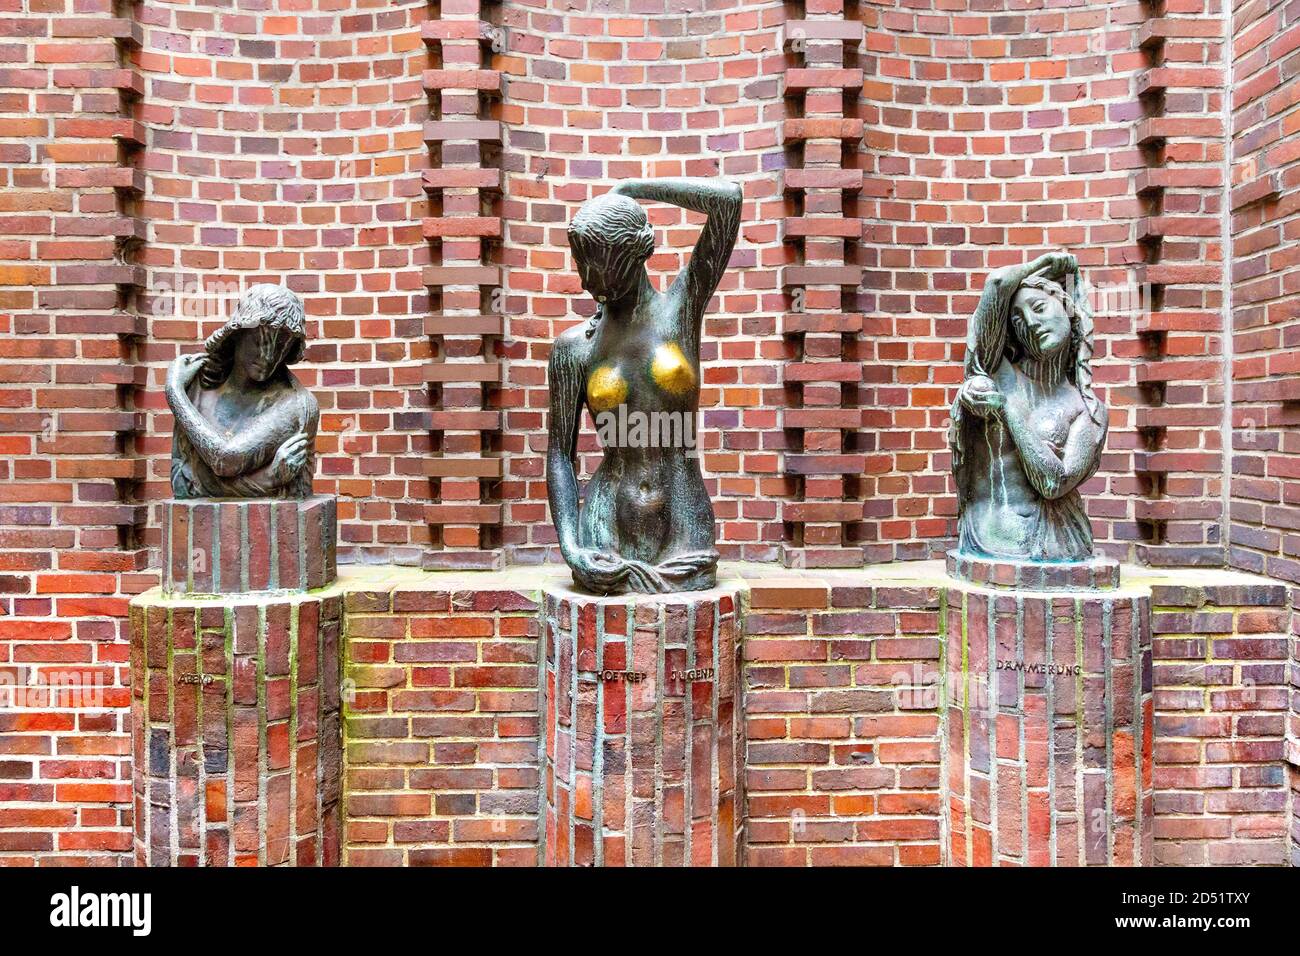 Sculptures by famous historic centre of Bremen - Böttcherstrasse, Germany Stock Photo